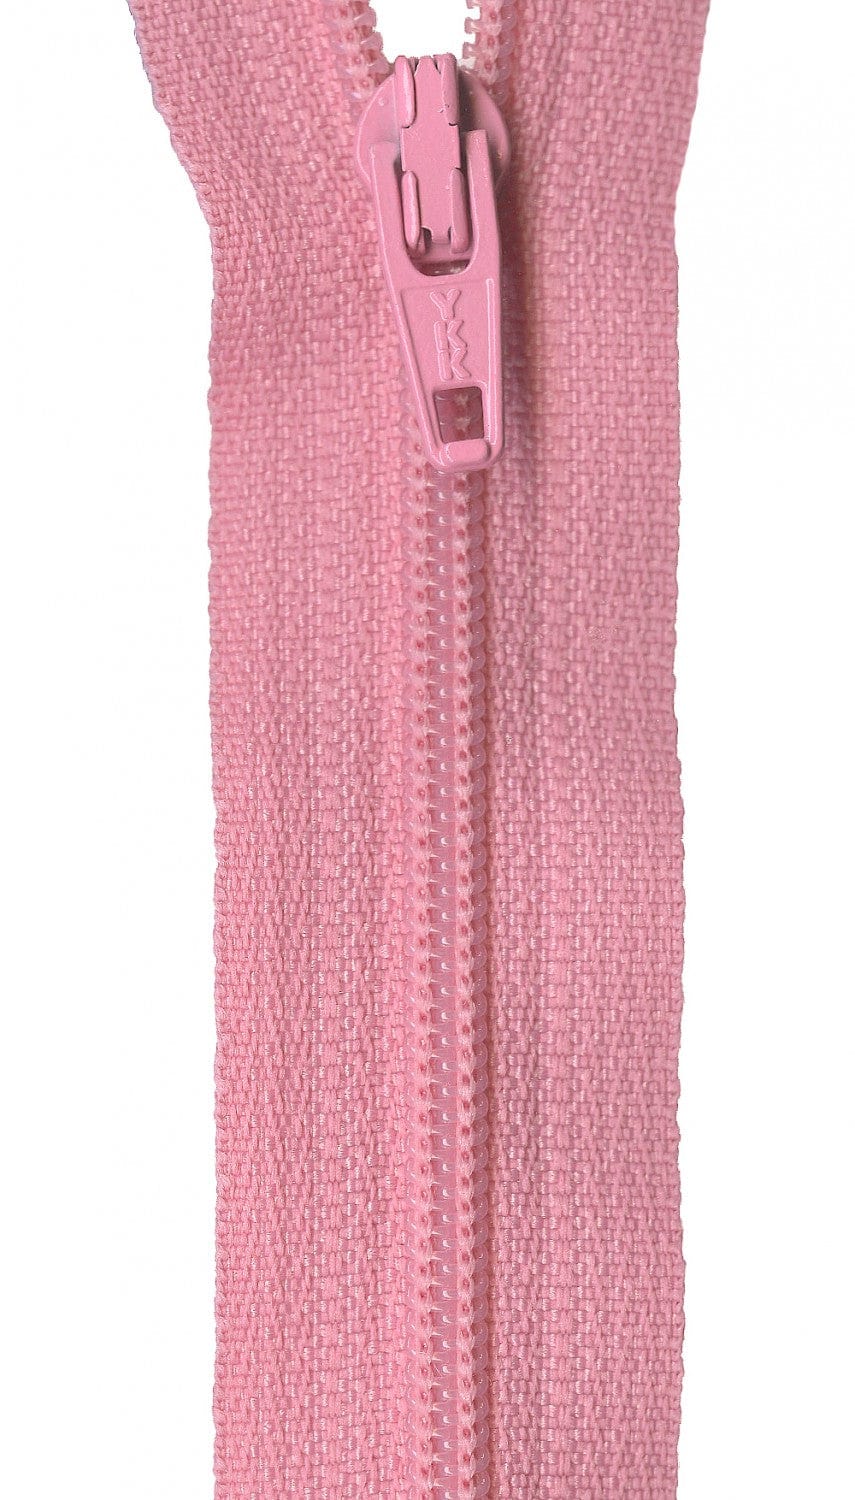 Ziplon Regular Zipper in Dusty Pink